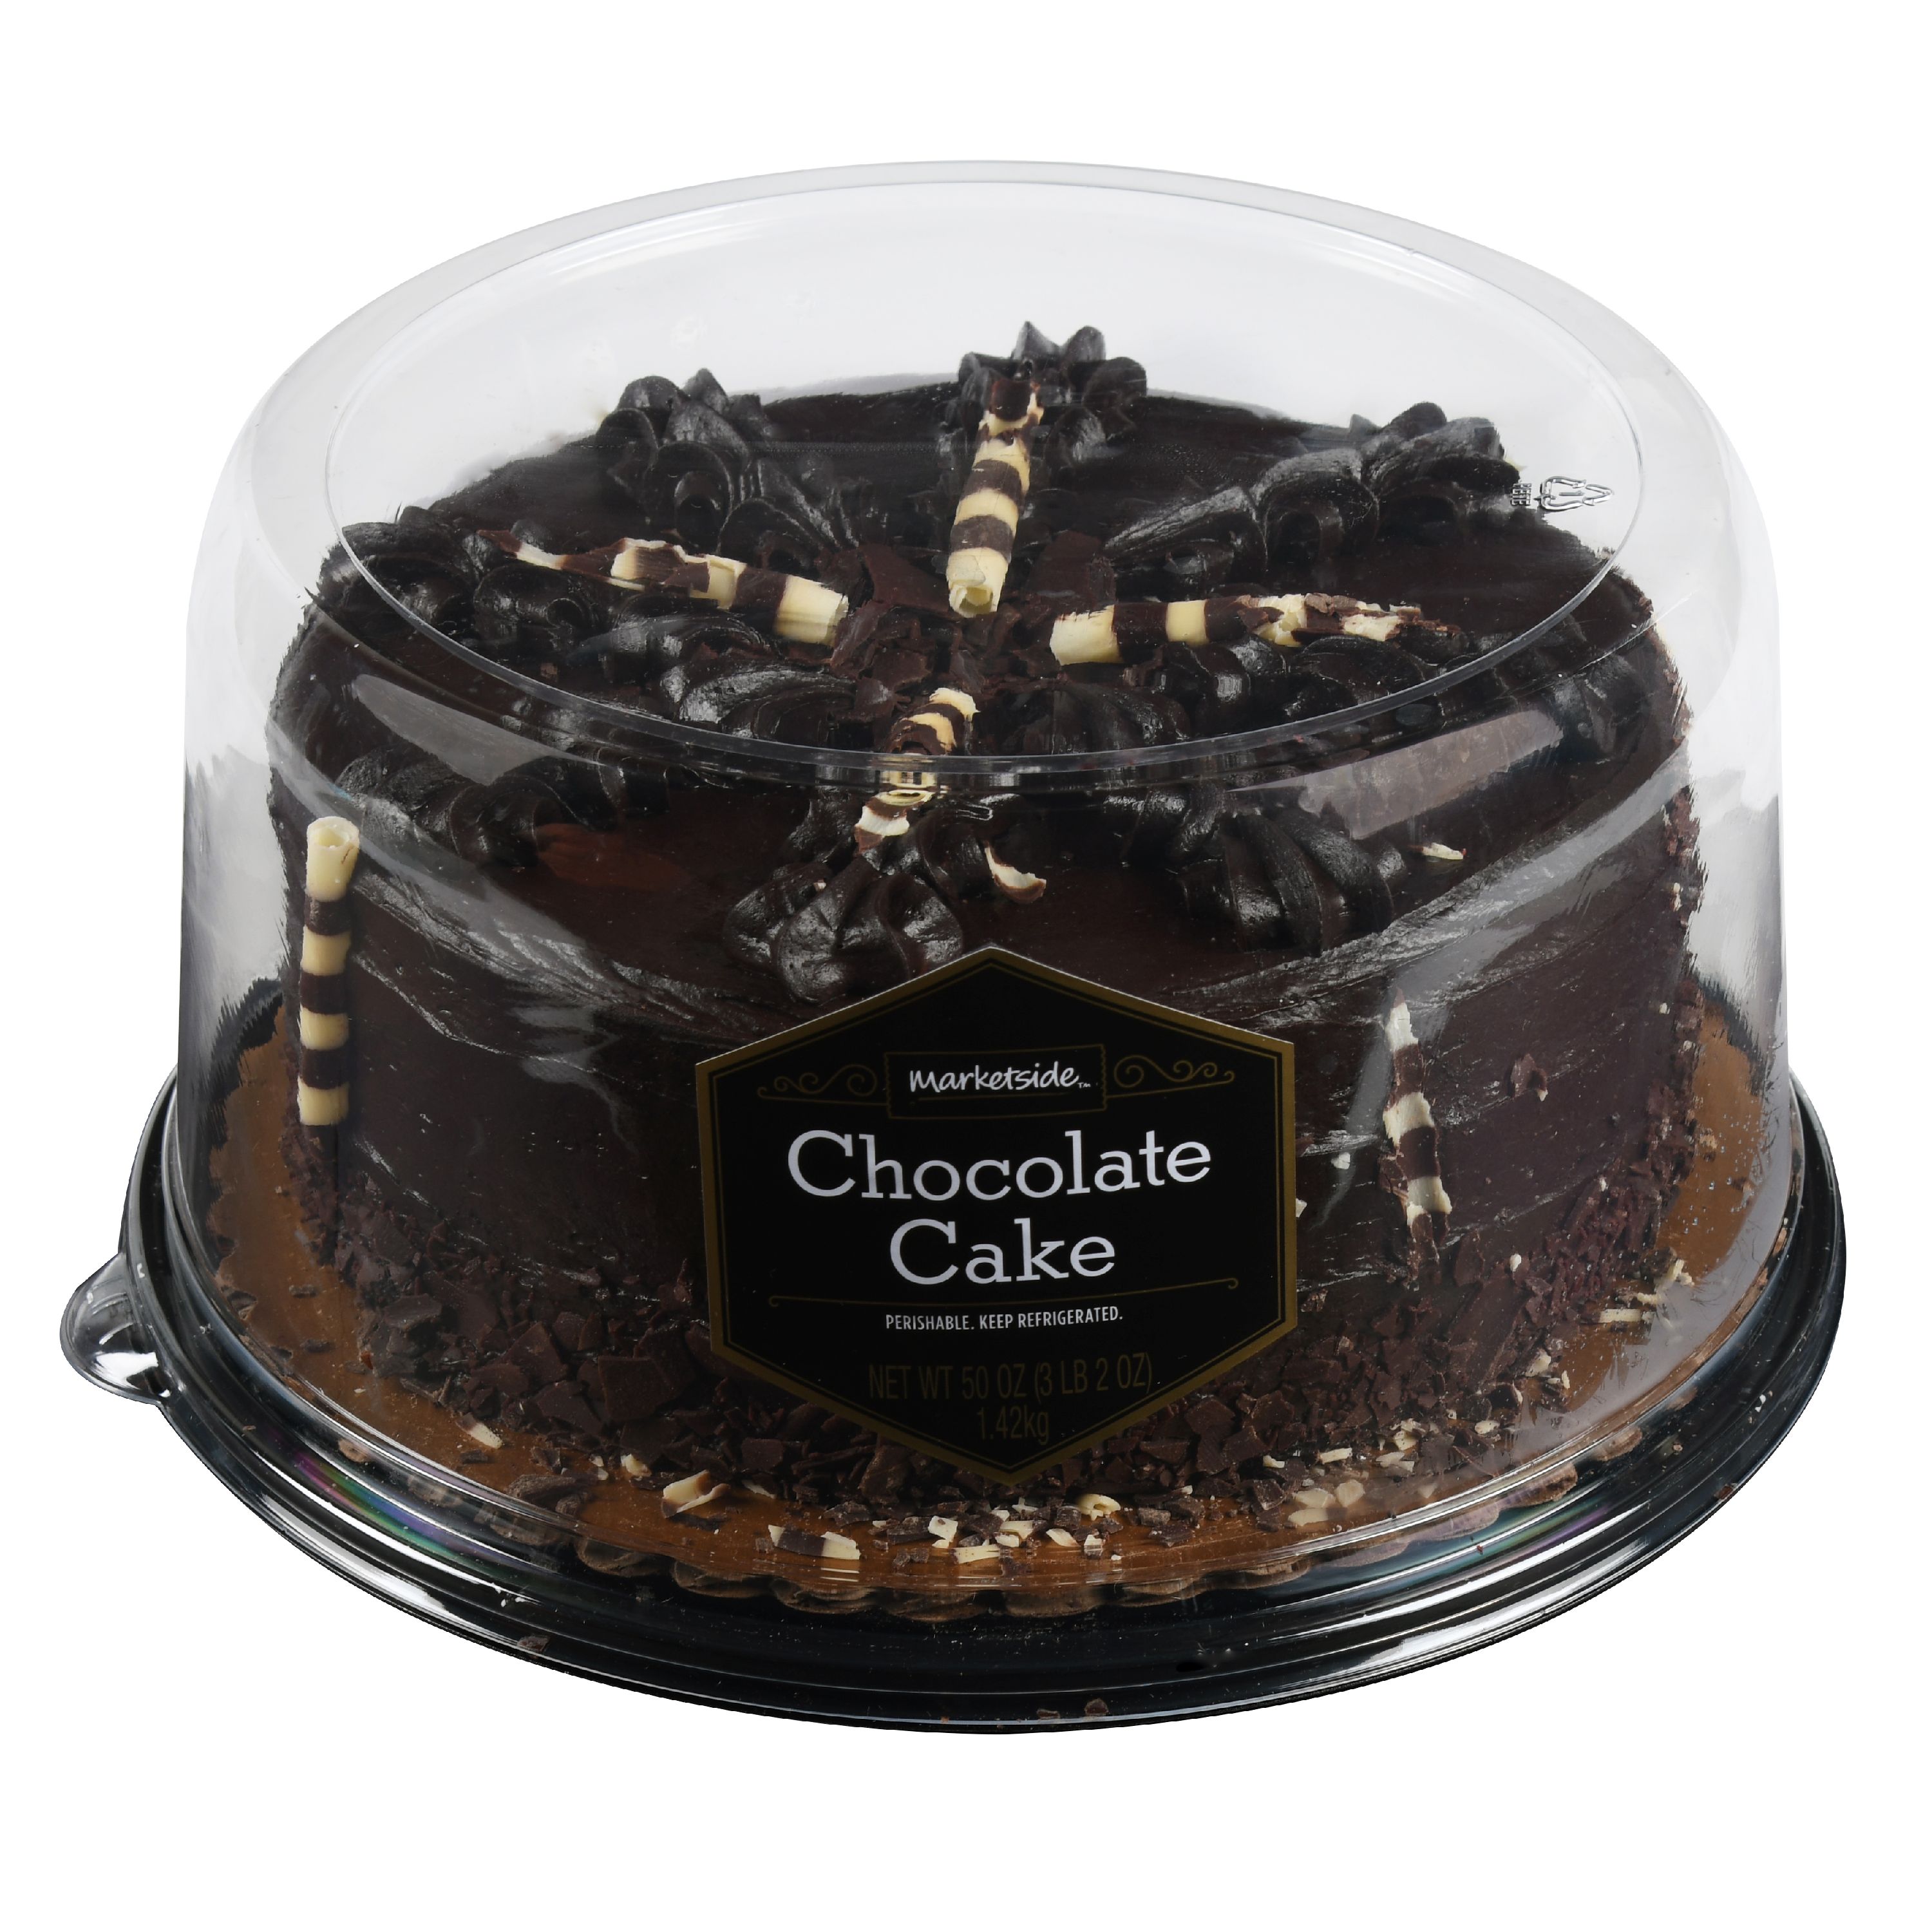 Marketside Ultimate Chocolate Ganache Cake, 50 oz – Walmart Inventory ...